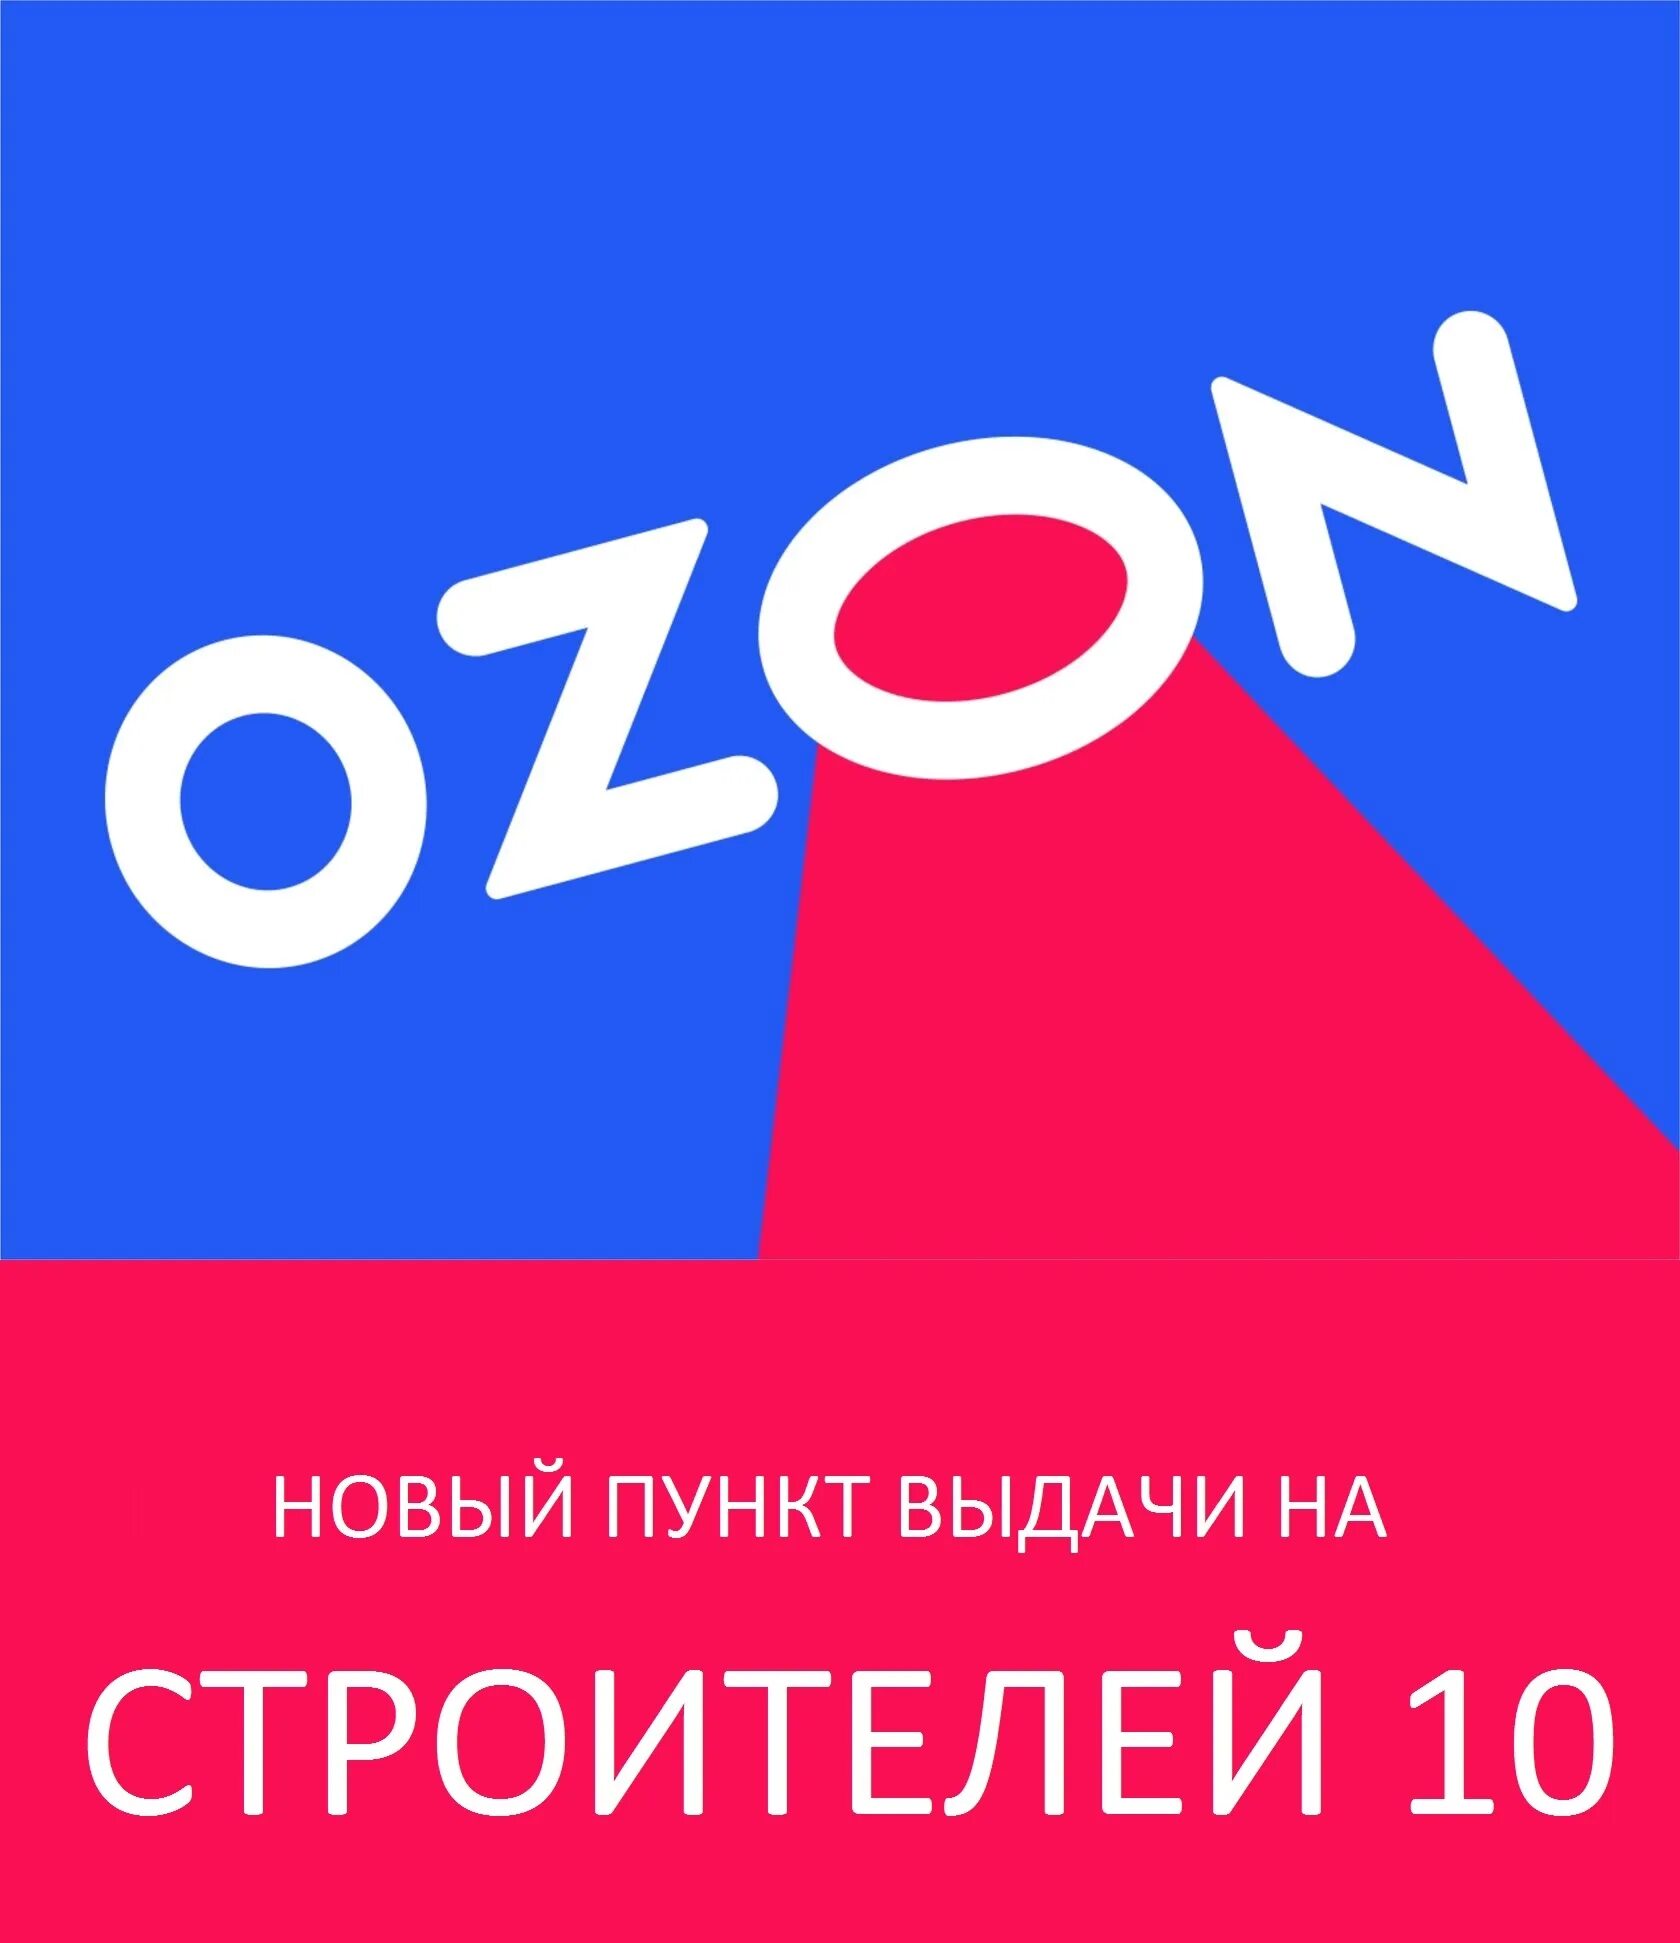 Т д озон. Озон логотип. OZON логотип новый. Логотип Озон квадратный. Oz логотип.